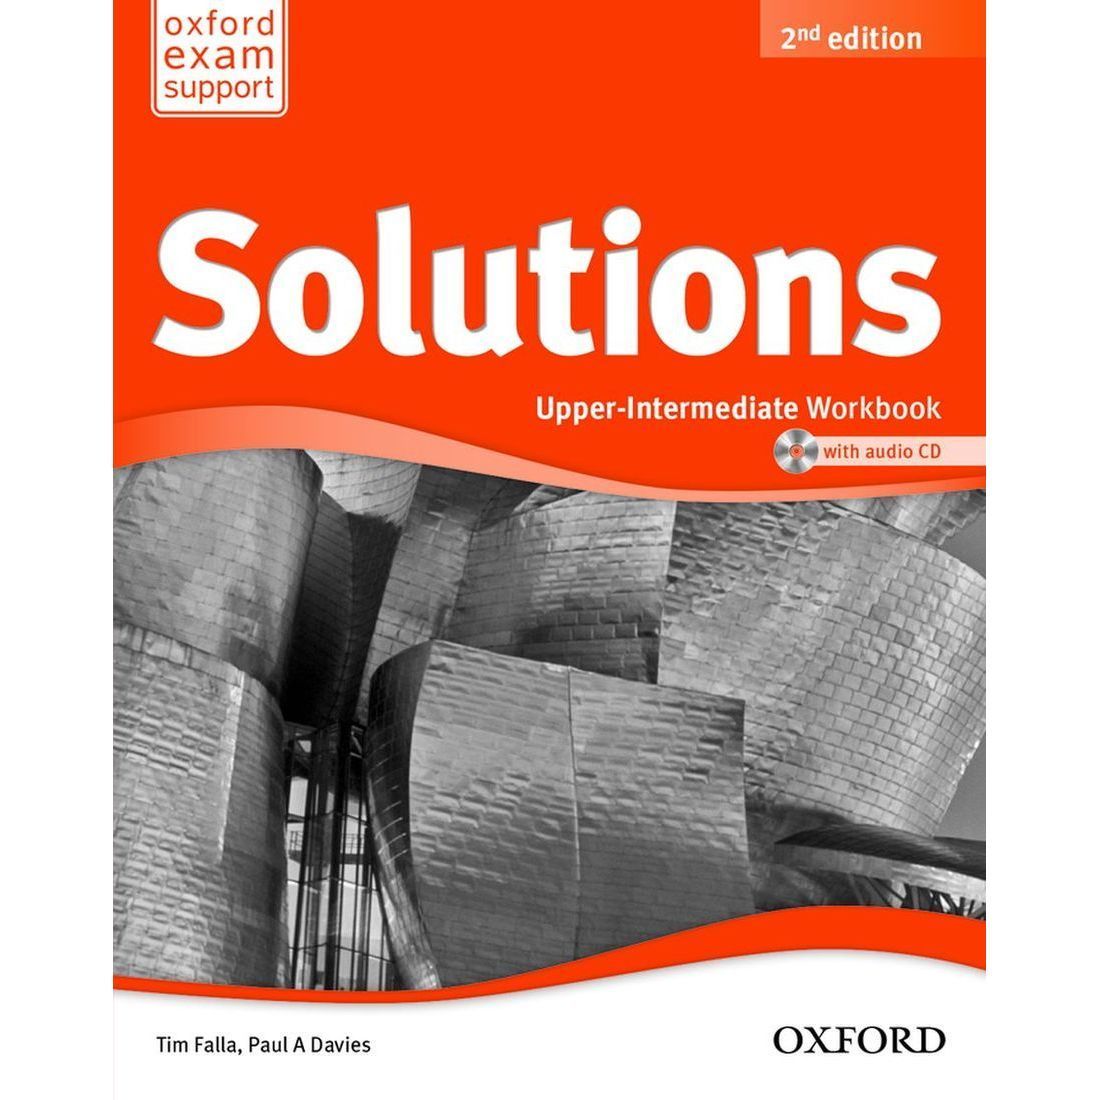 Solutions Intermediate 2nd Edition Workbook. Ford Edition solutions Intermediate Workbook аудио. Solution pre Intermediate Workbook tim Falla Paul a Davies ответы. Solutions: Upper-Intermediate.